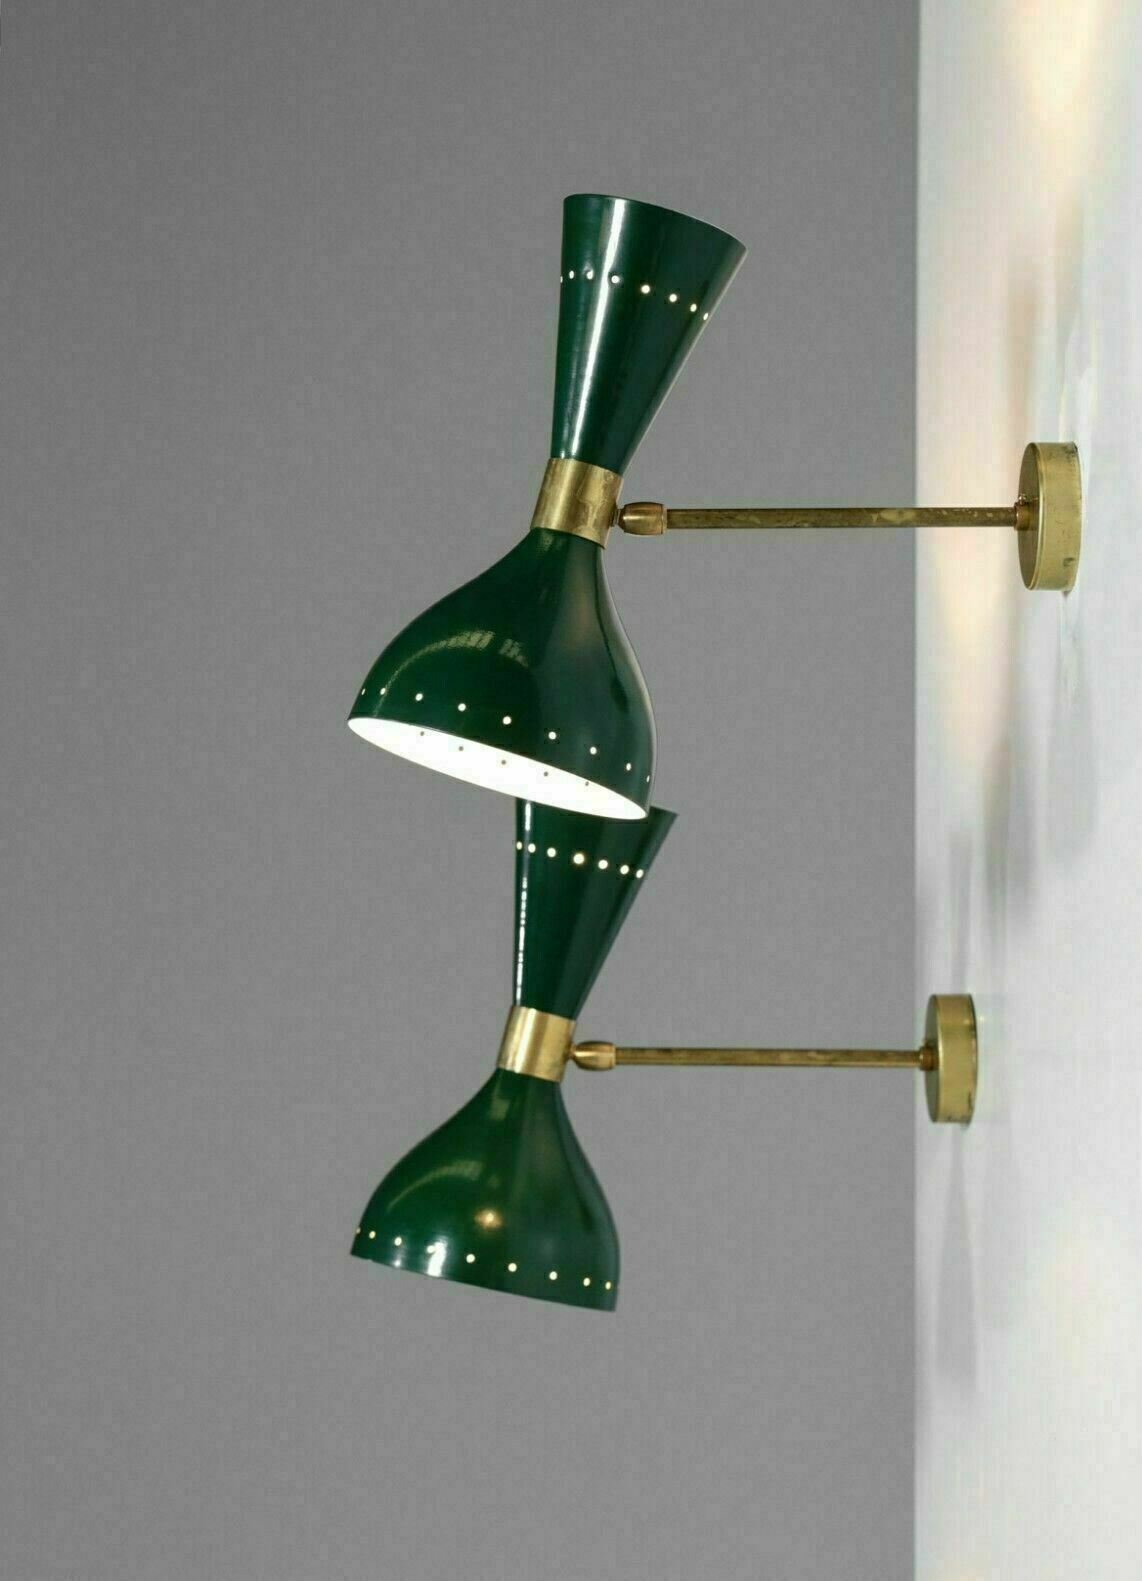 Wall Sconce Diabolo Pair of Modern Italian Lights Green Fixture Lamps Set of 2